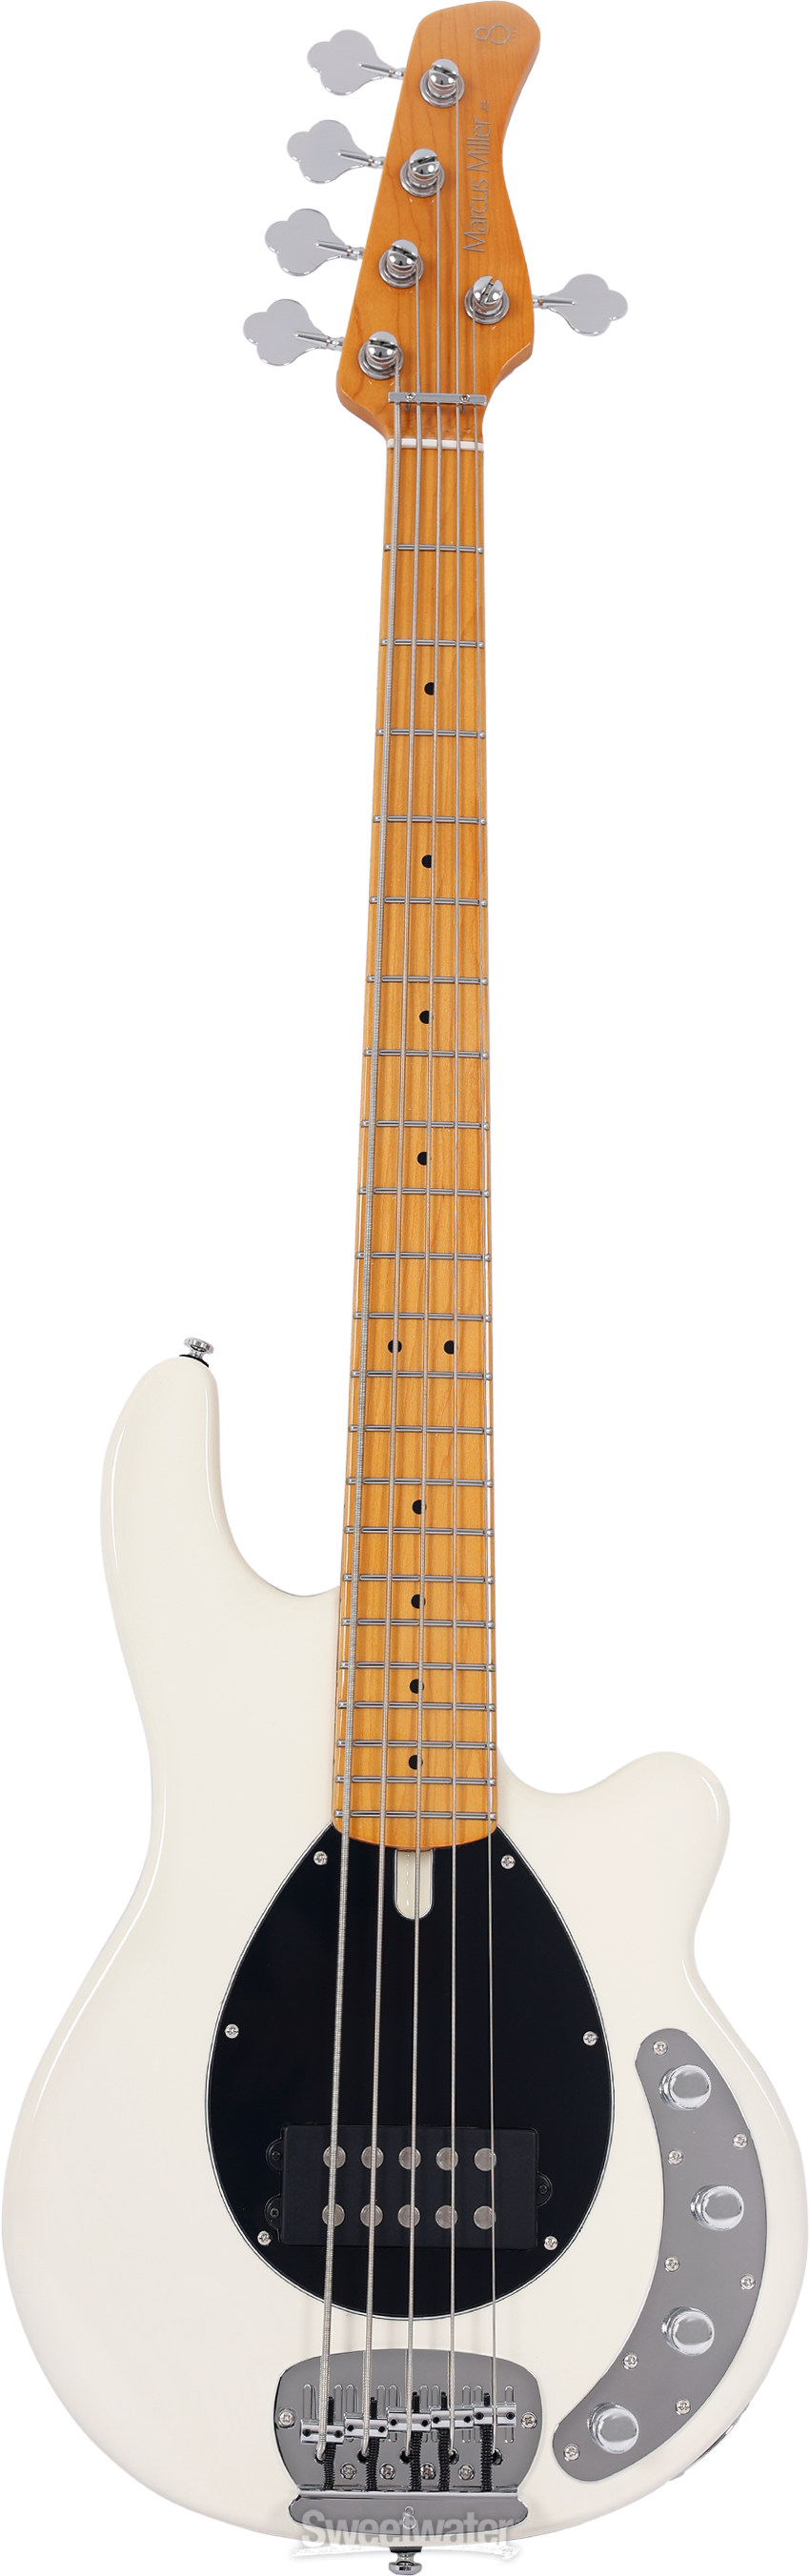 Sire Marcus Miller Z3 5-string Bass Guitar - Antique White